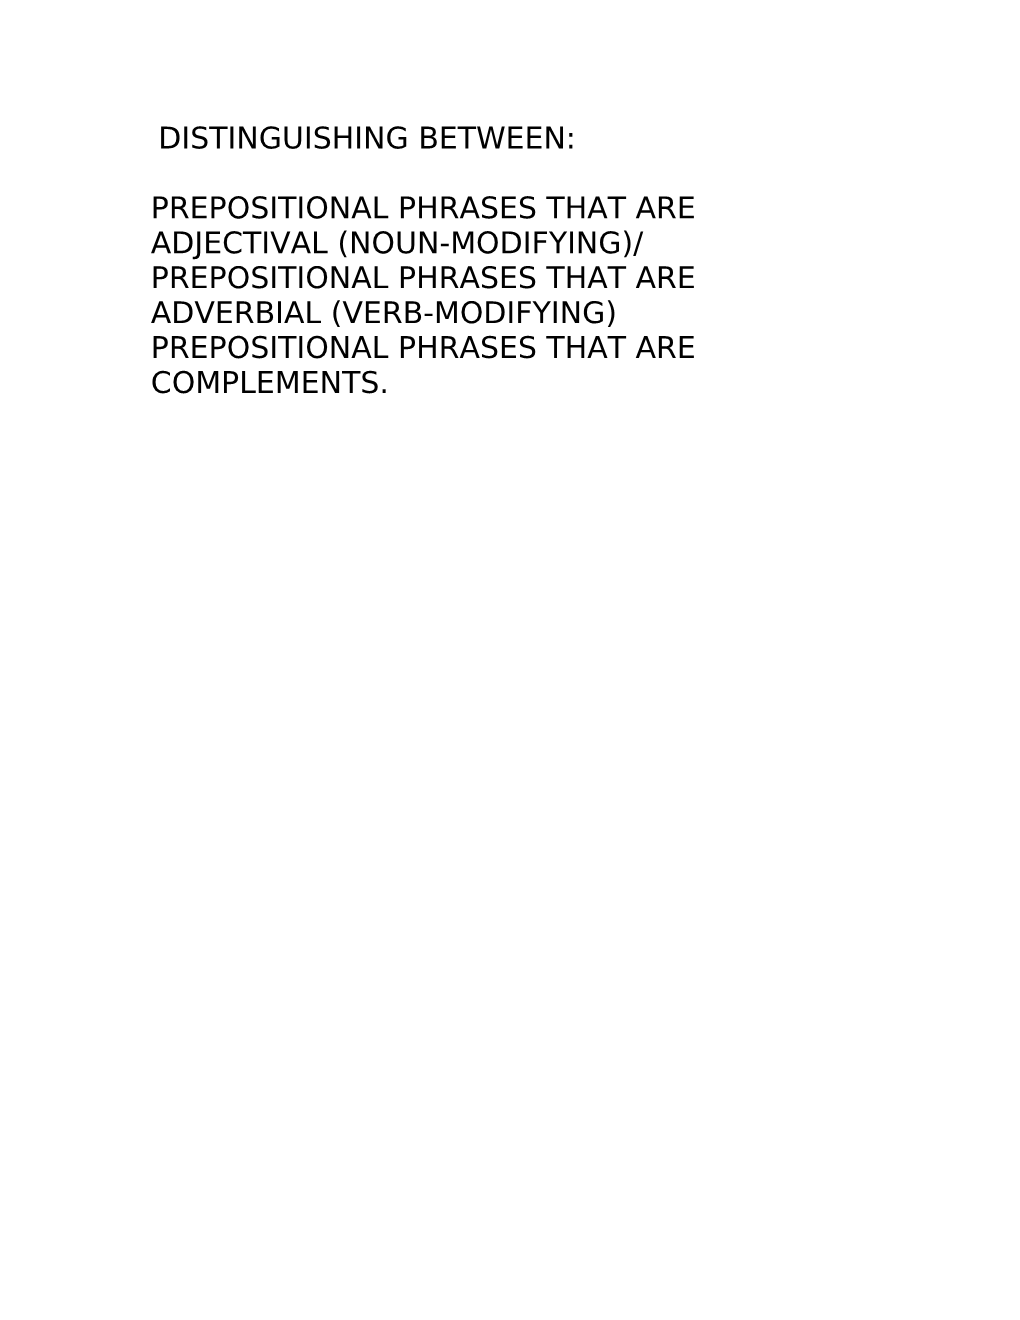 Prepositional Phrases That Are Adjectival (Noun-Modifying)